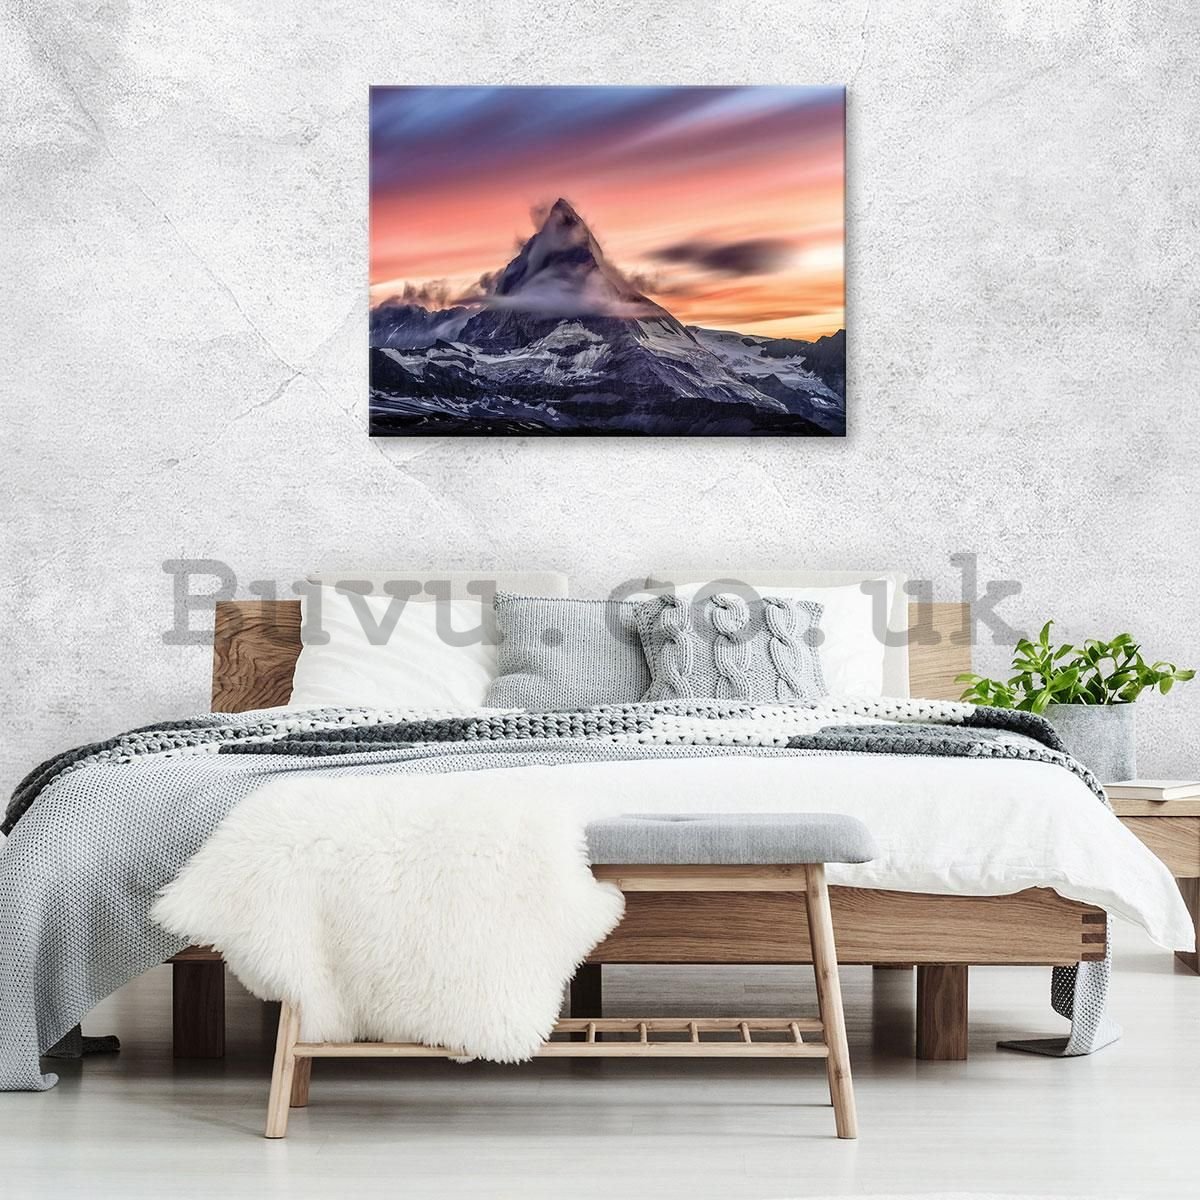 Painting on canvas: Matterhorn (1) - 100x75 cm